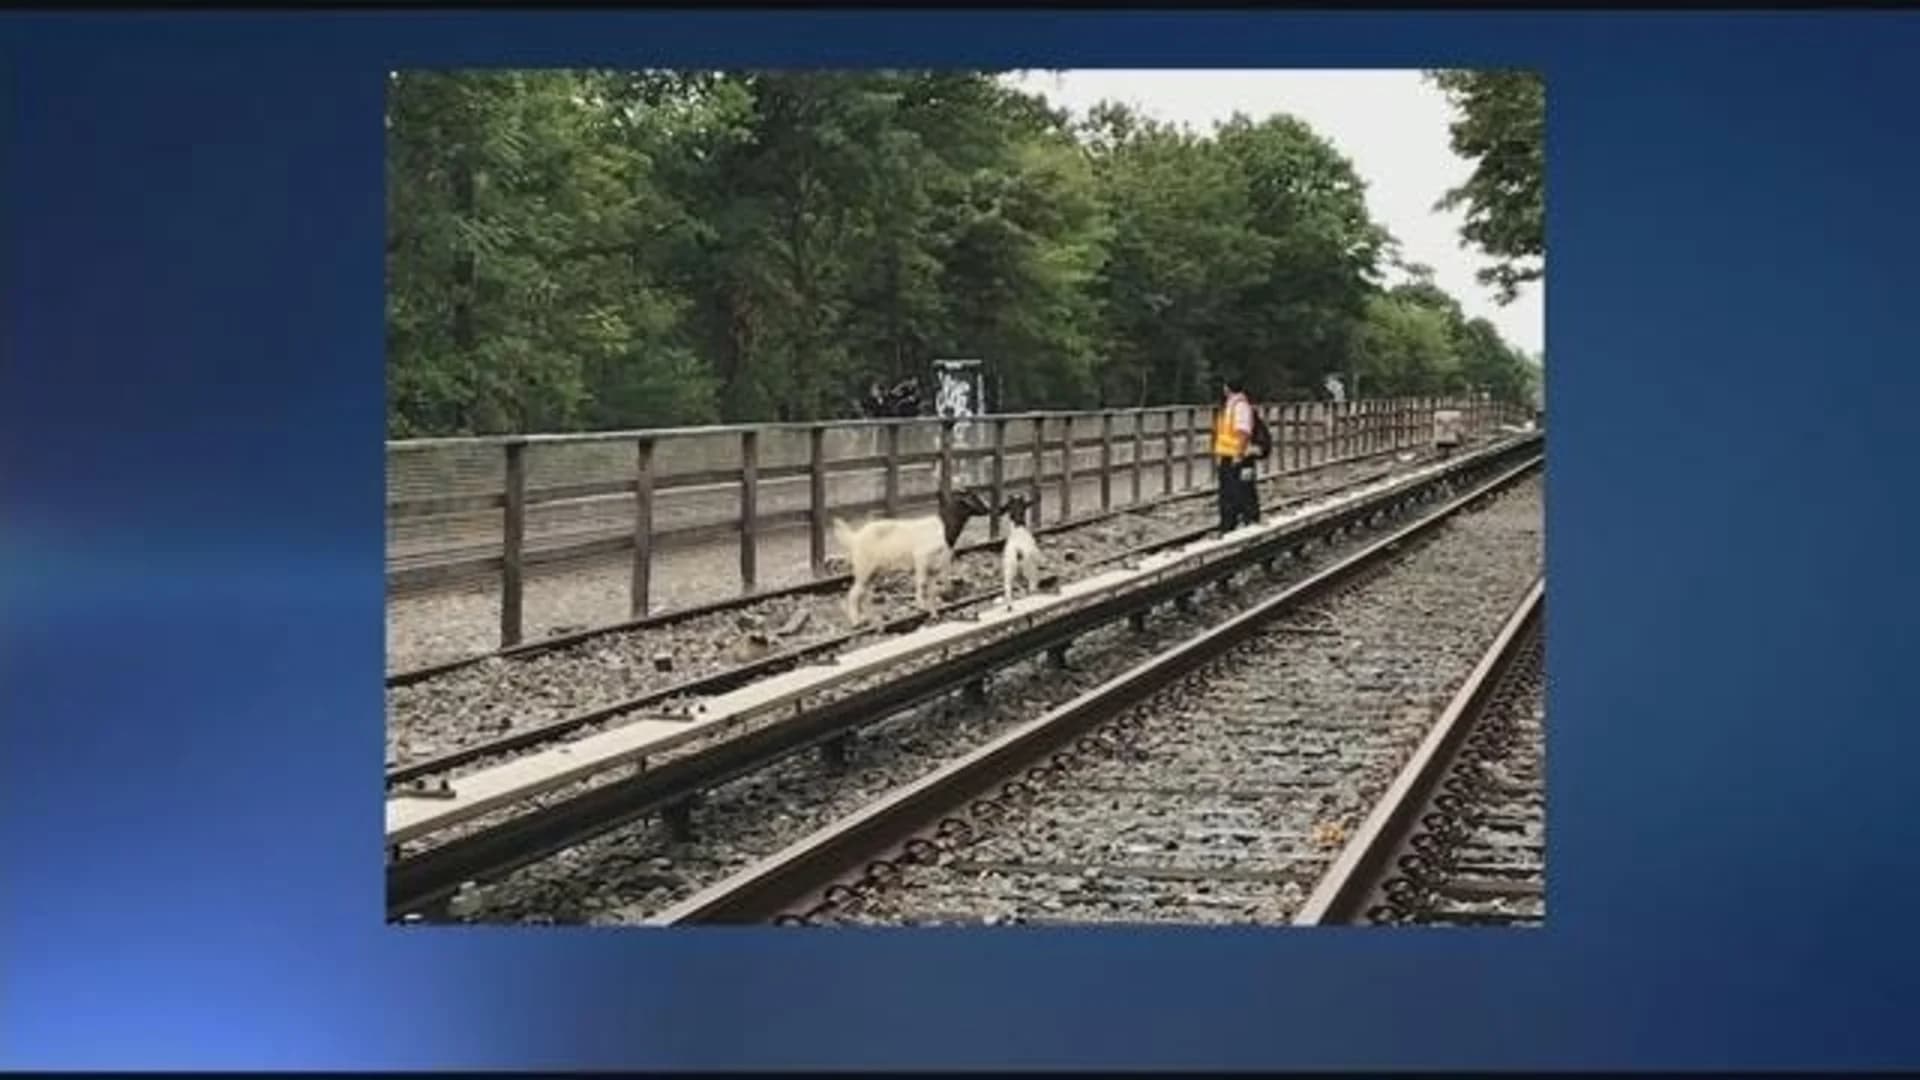 Goats roam loose along N line tracks in Brooklyn